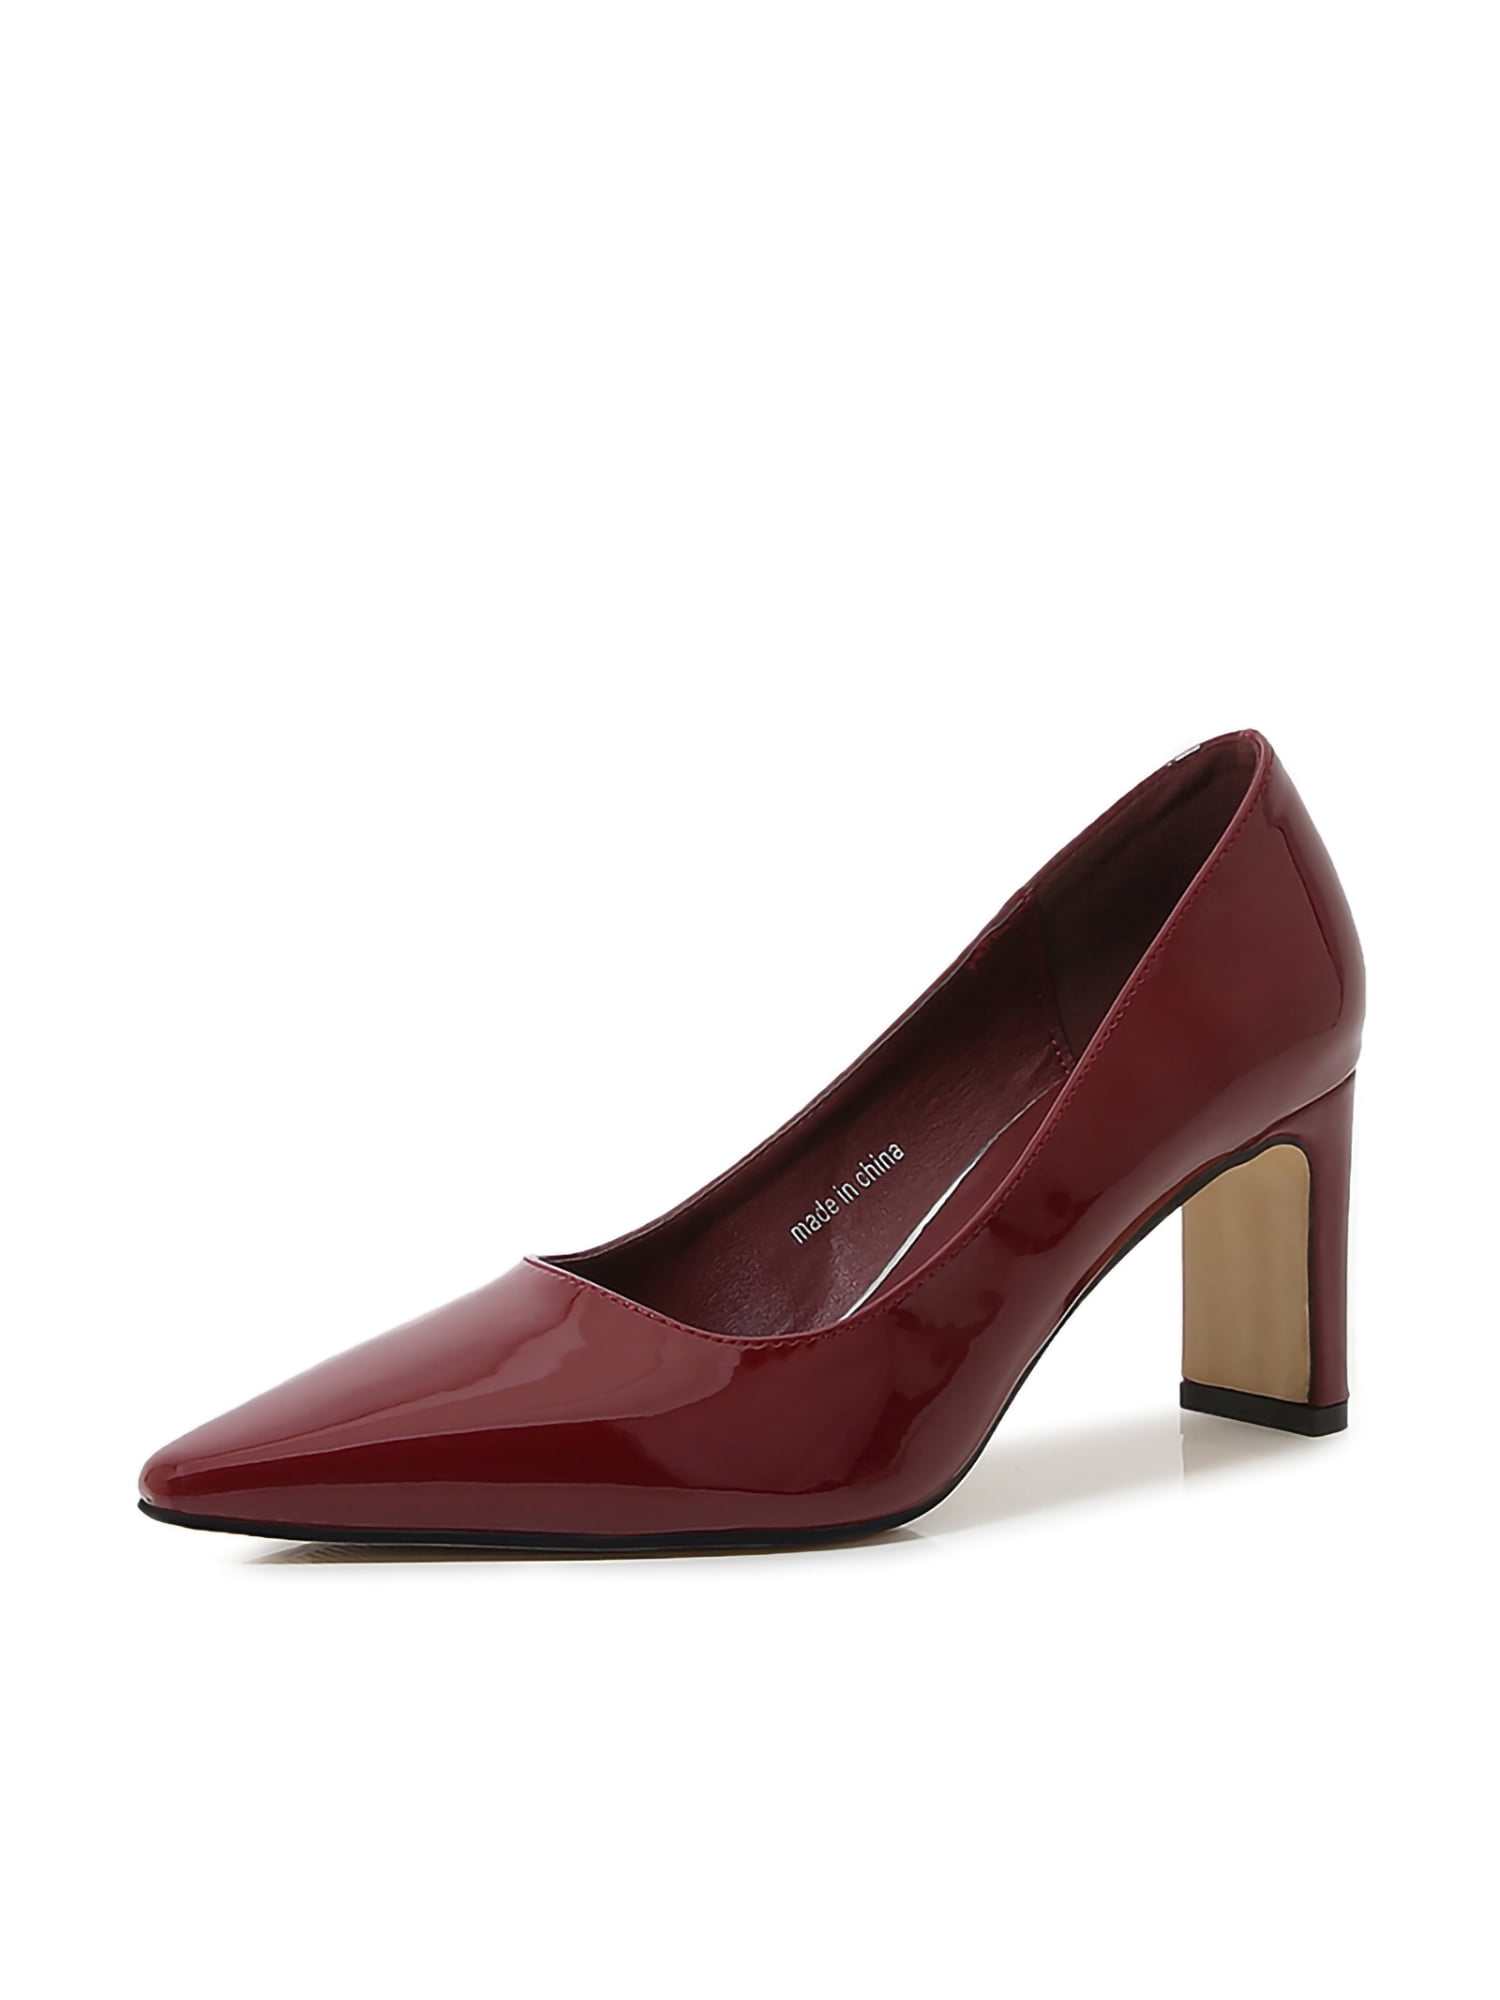 Block Heels Patent Leather Sandal Women 5cm Kitten Heels Shoes Woman Sandals  Fashion Elegant Wine Red Wedding Heeled Mules